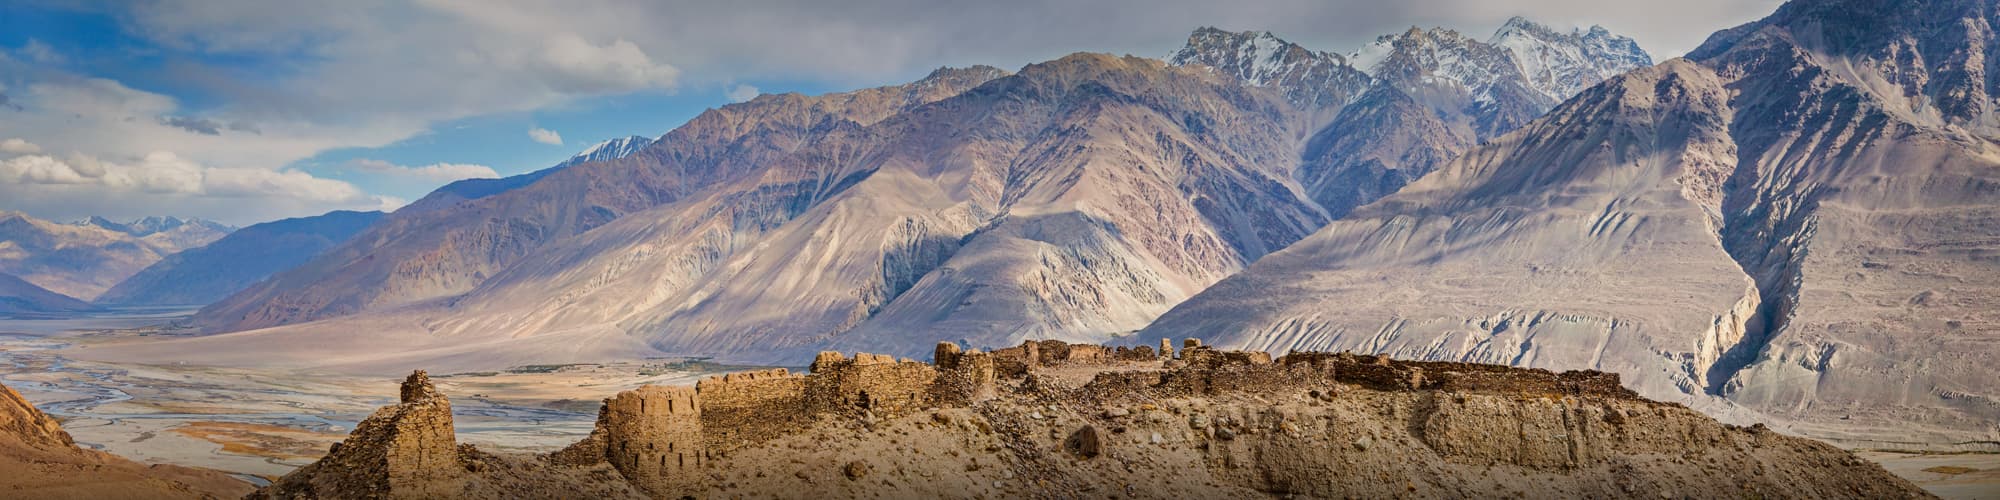 Voyage Montagne Tadjikistan © primkulov / Adobe Stock